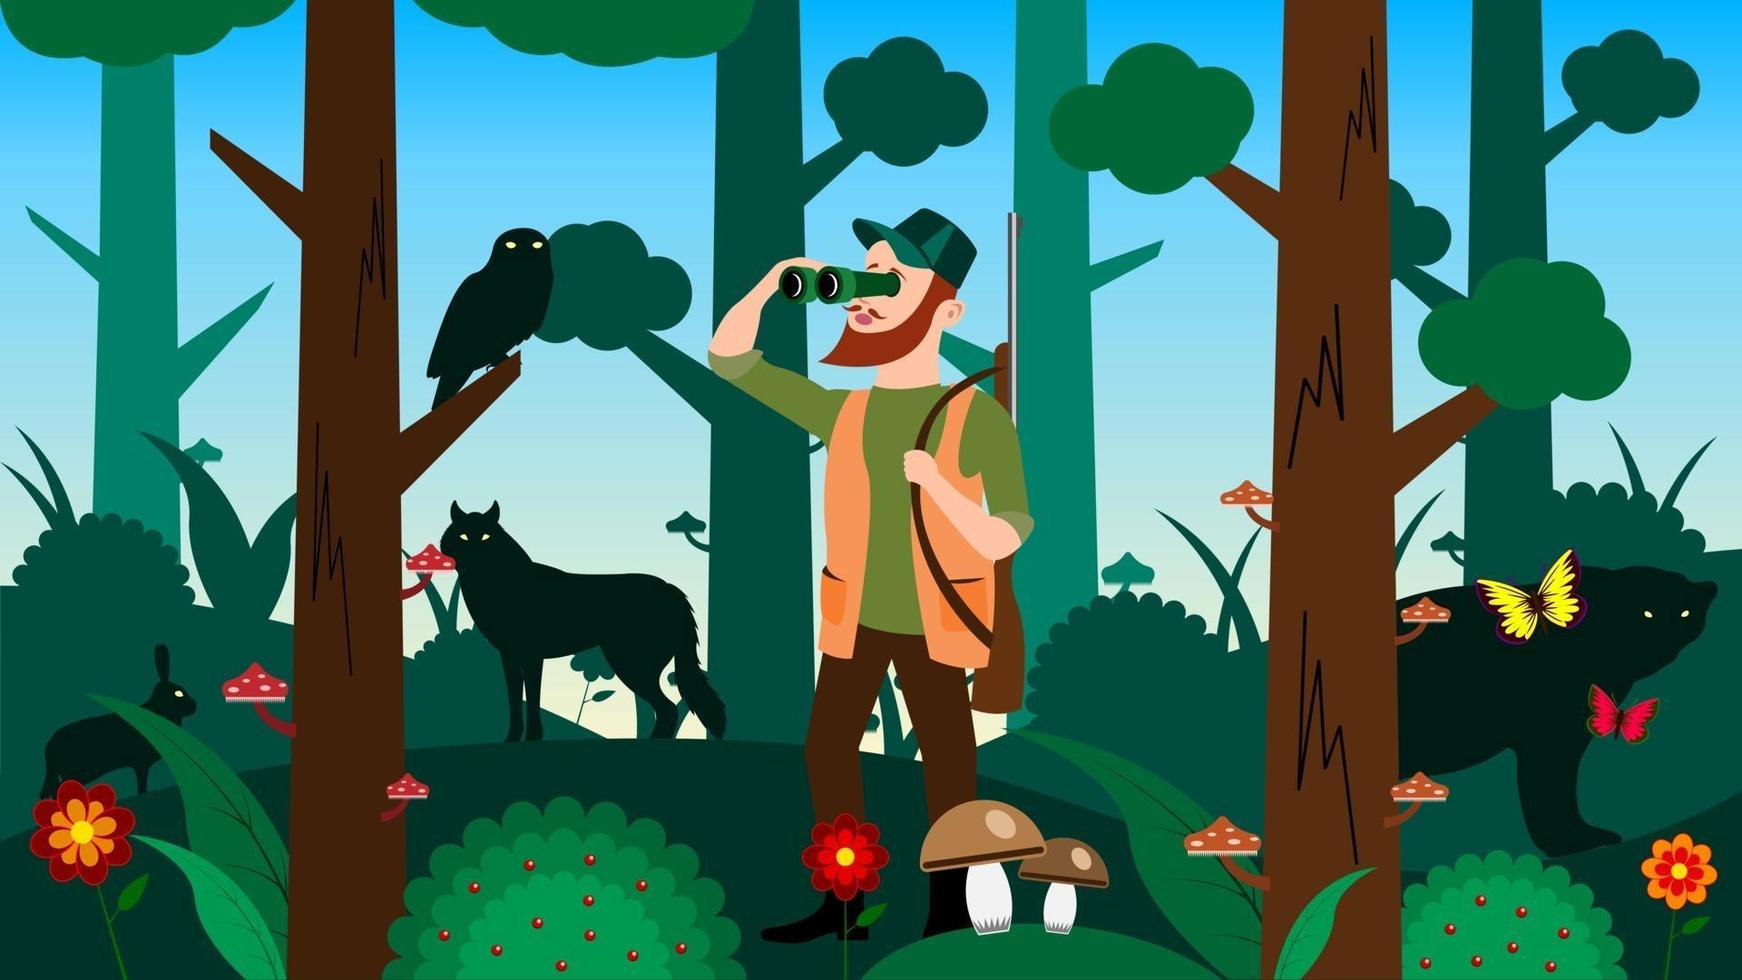 cazador mira a través de binoculares en bosque de dibujos animados vector